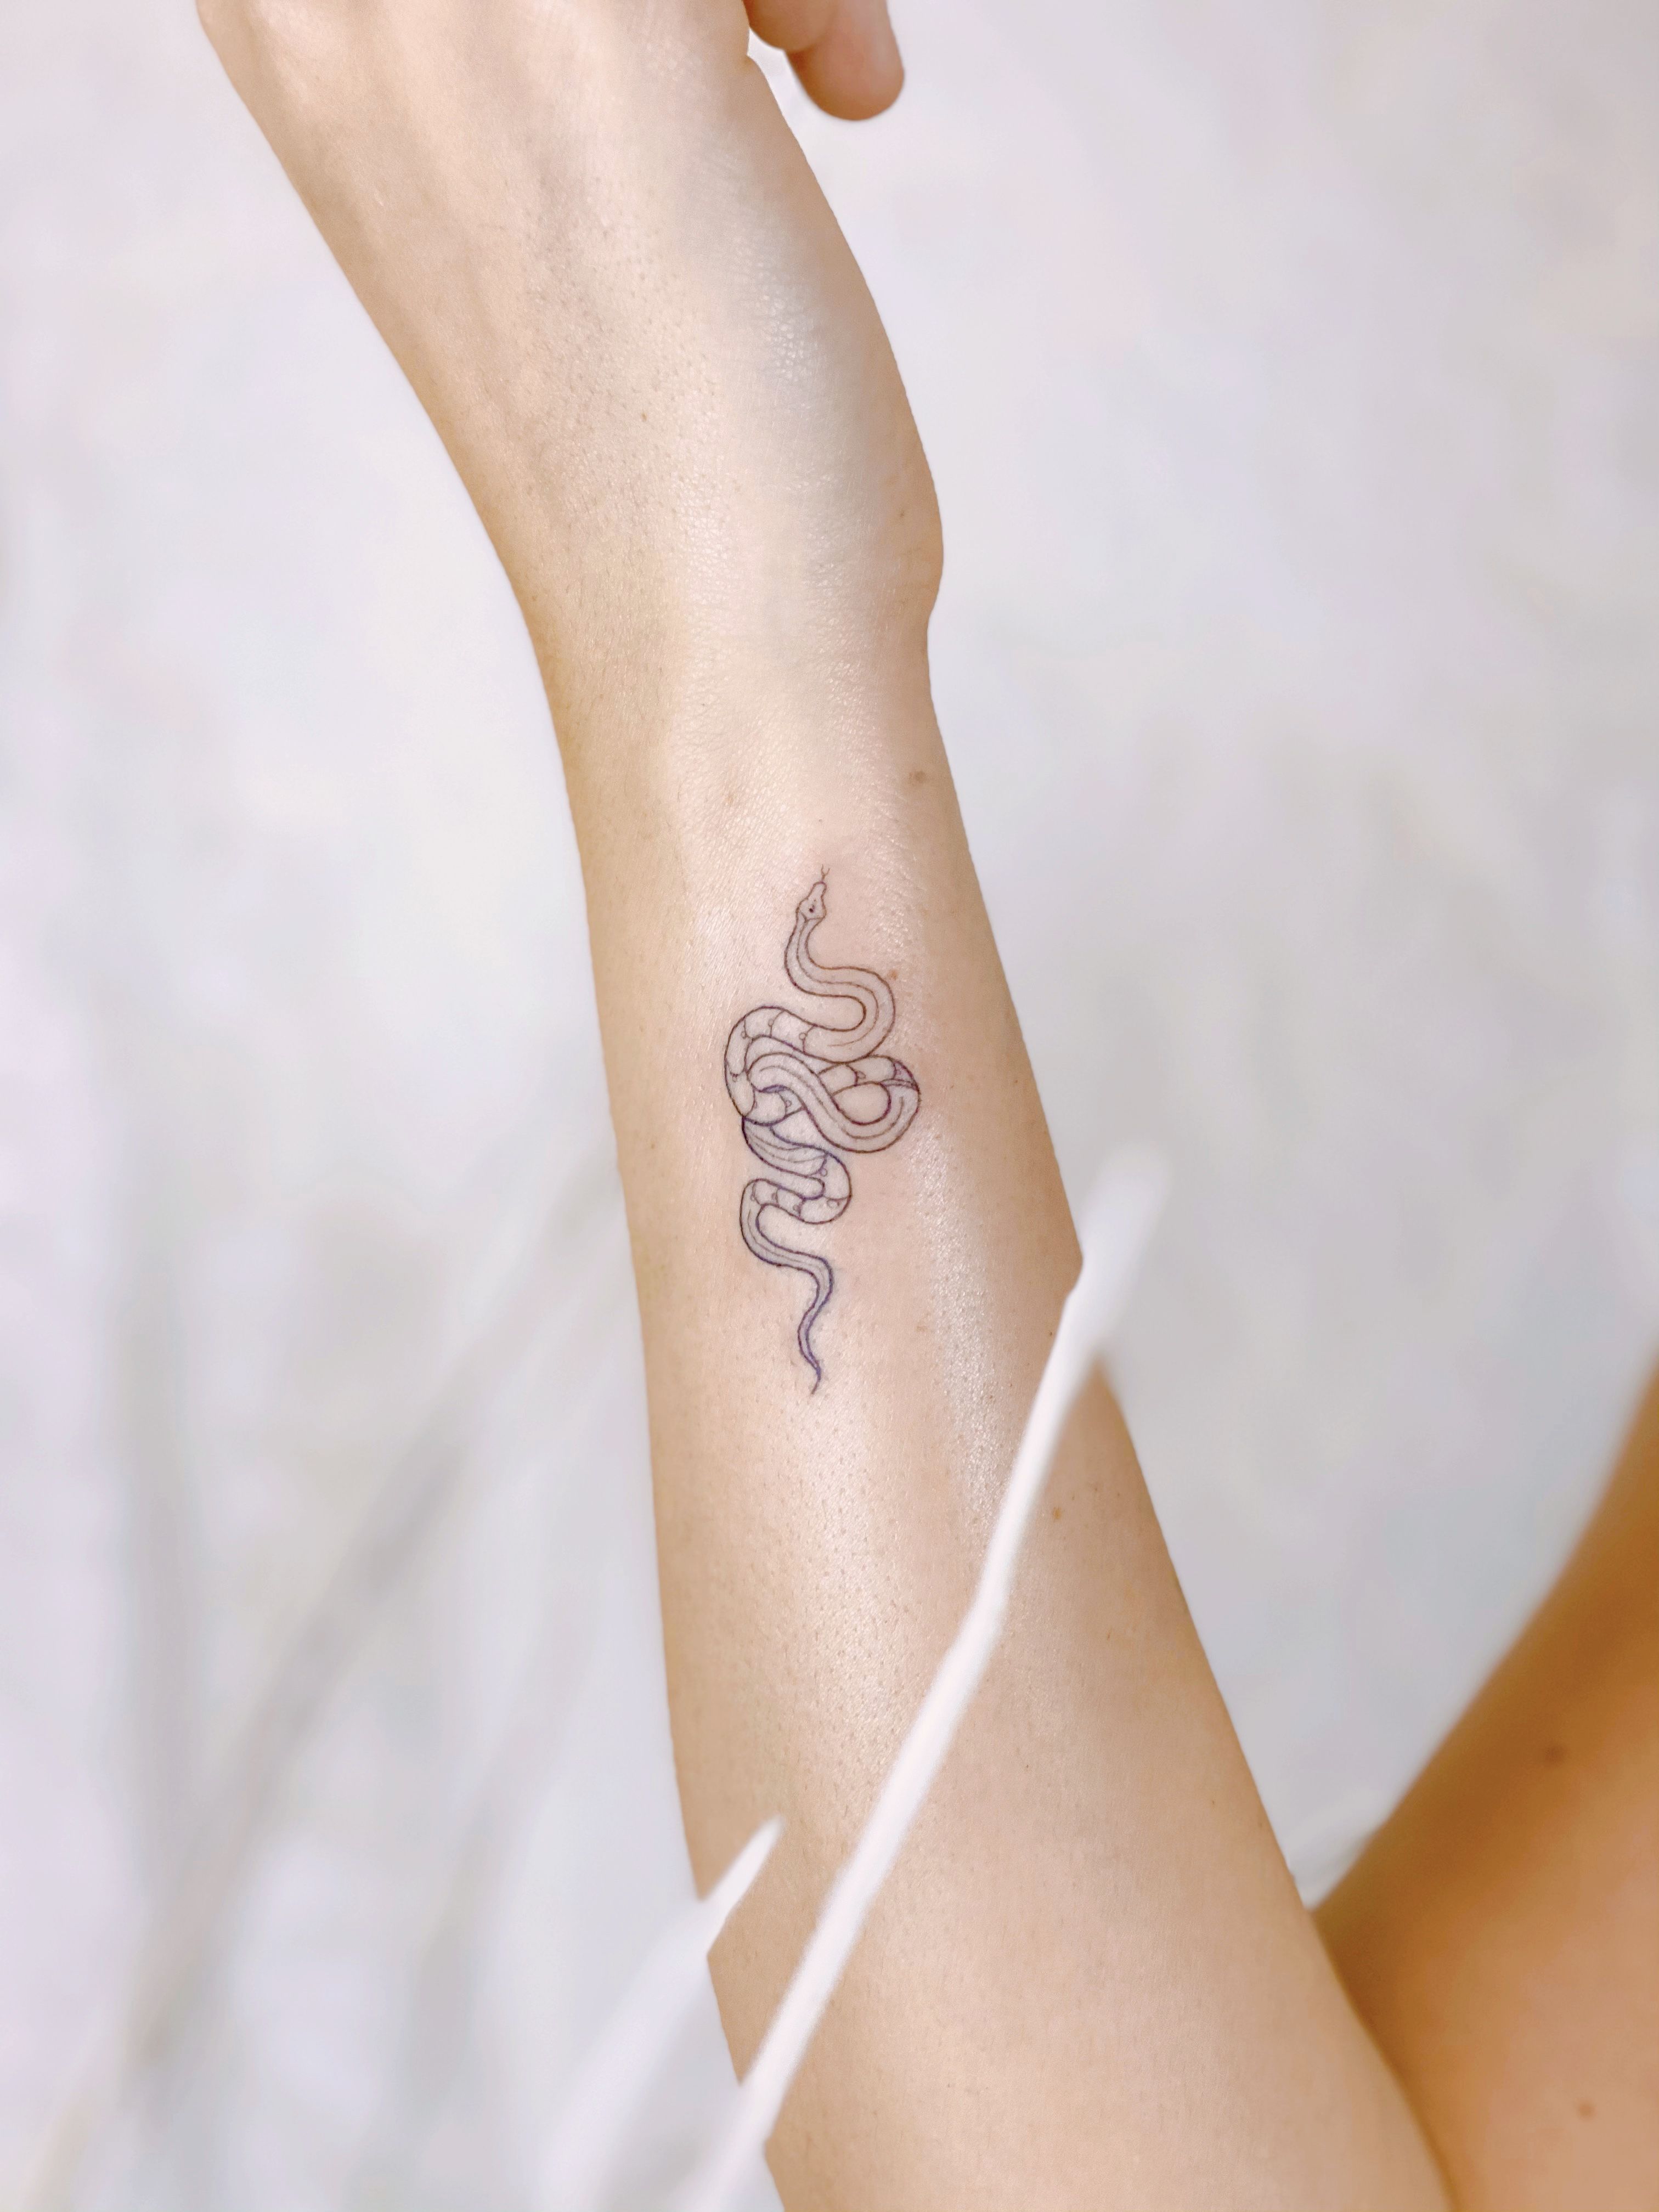 Fine line snake tattoo located on the pelvis